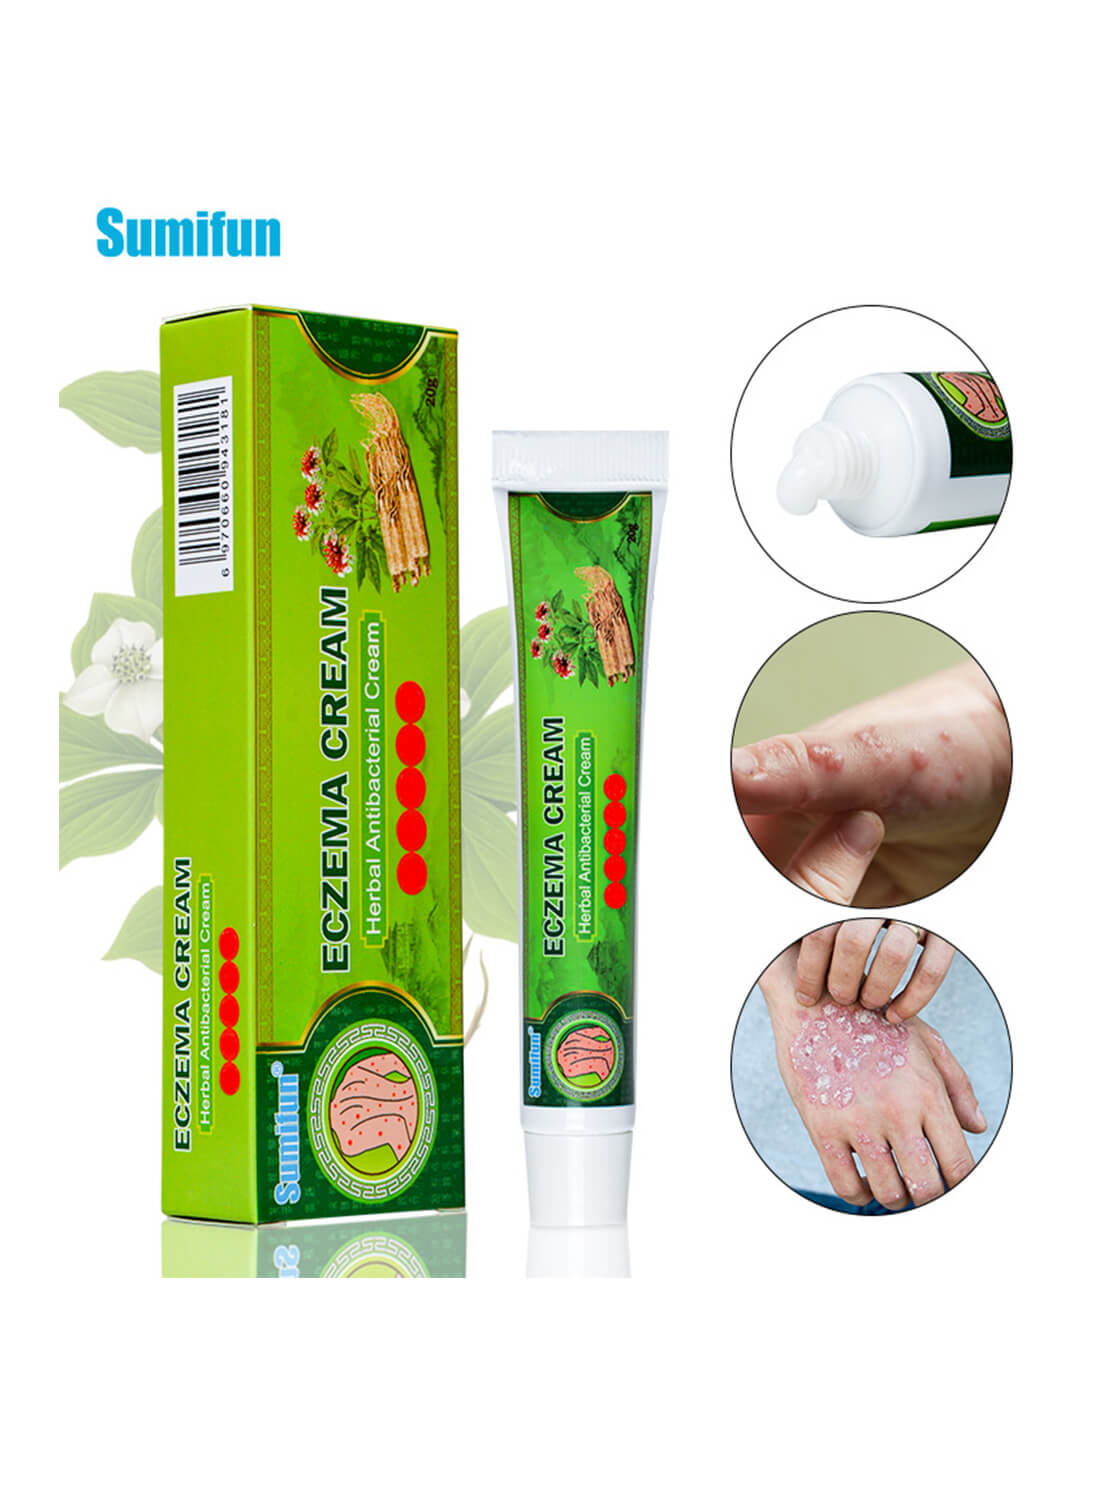 Sumifun Treatment Psoriasis Eczema Cream